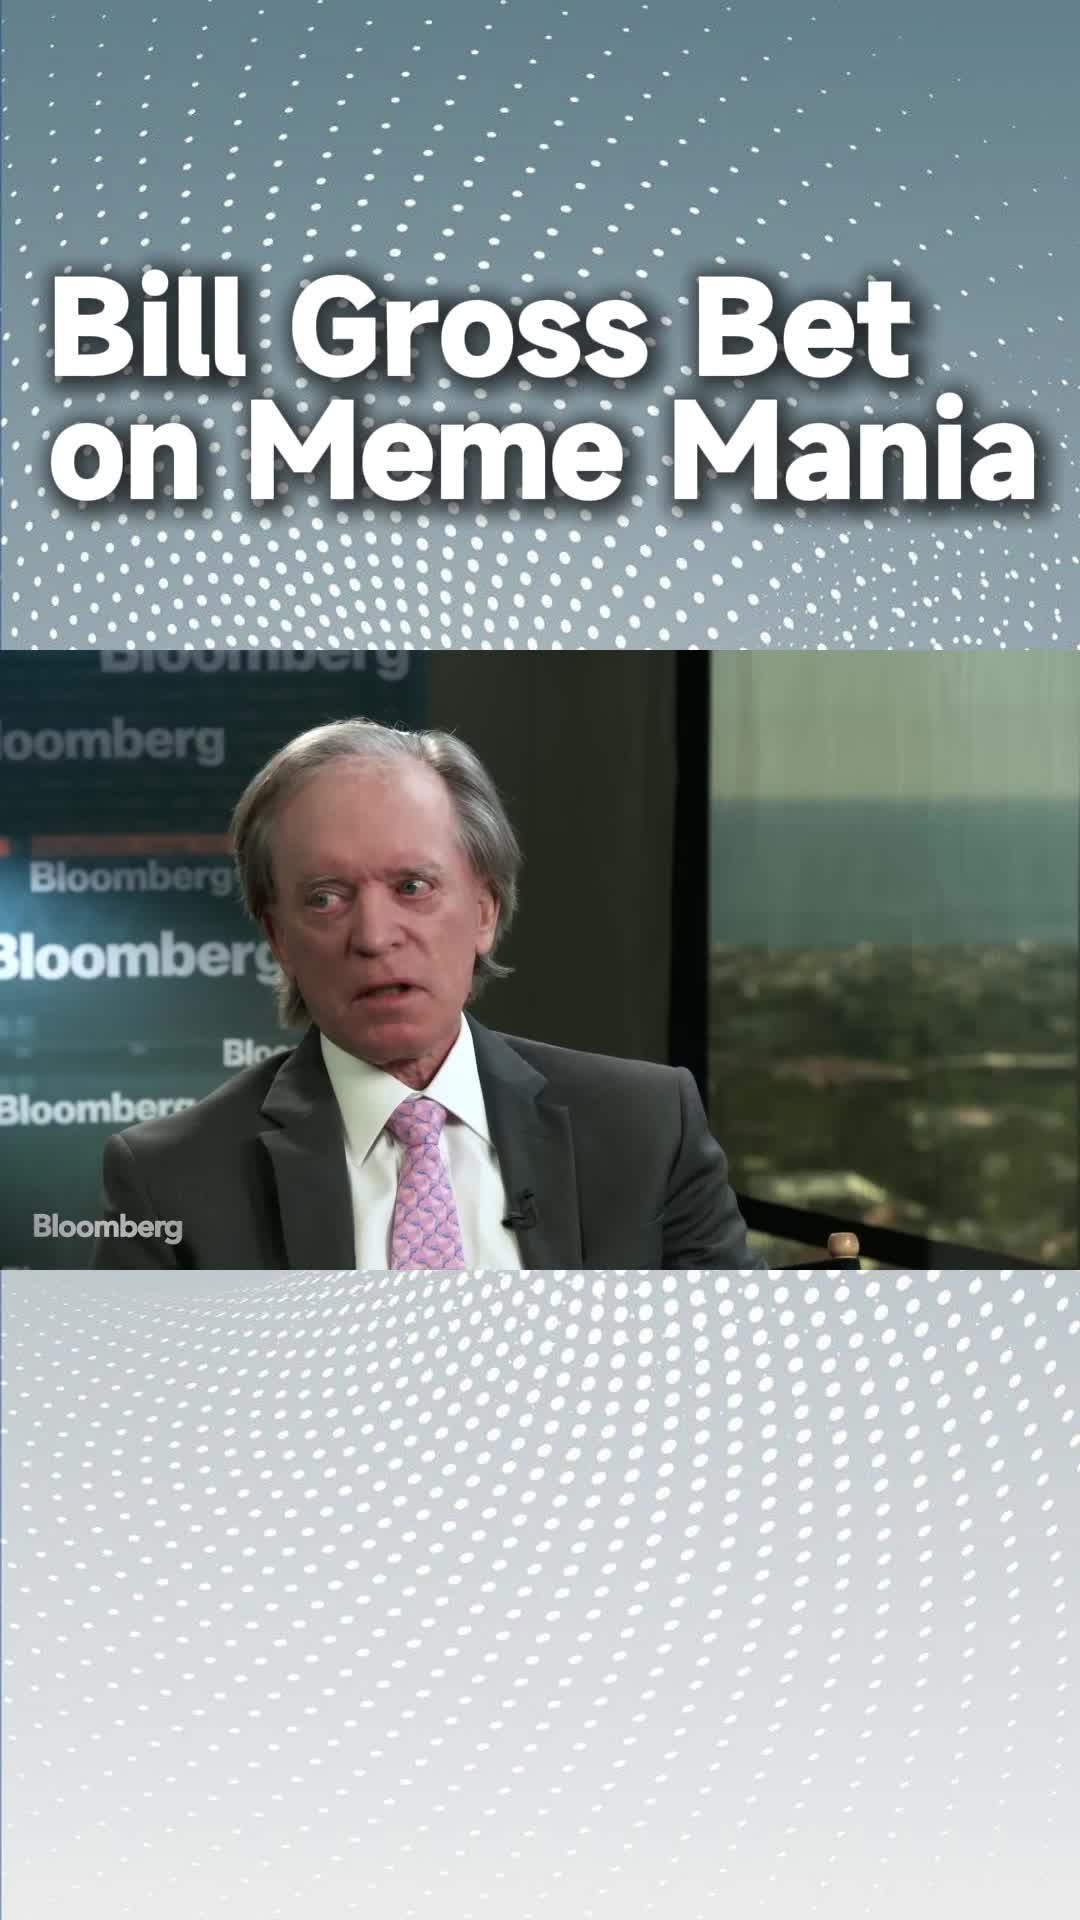 Bill Gross Bet on Meme Mania!